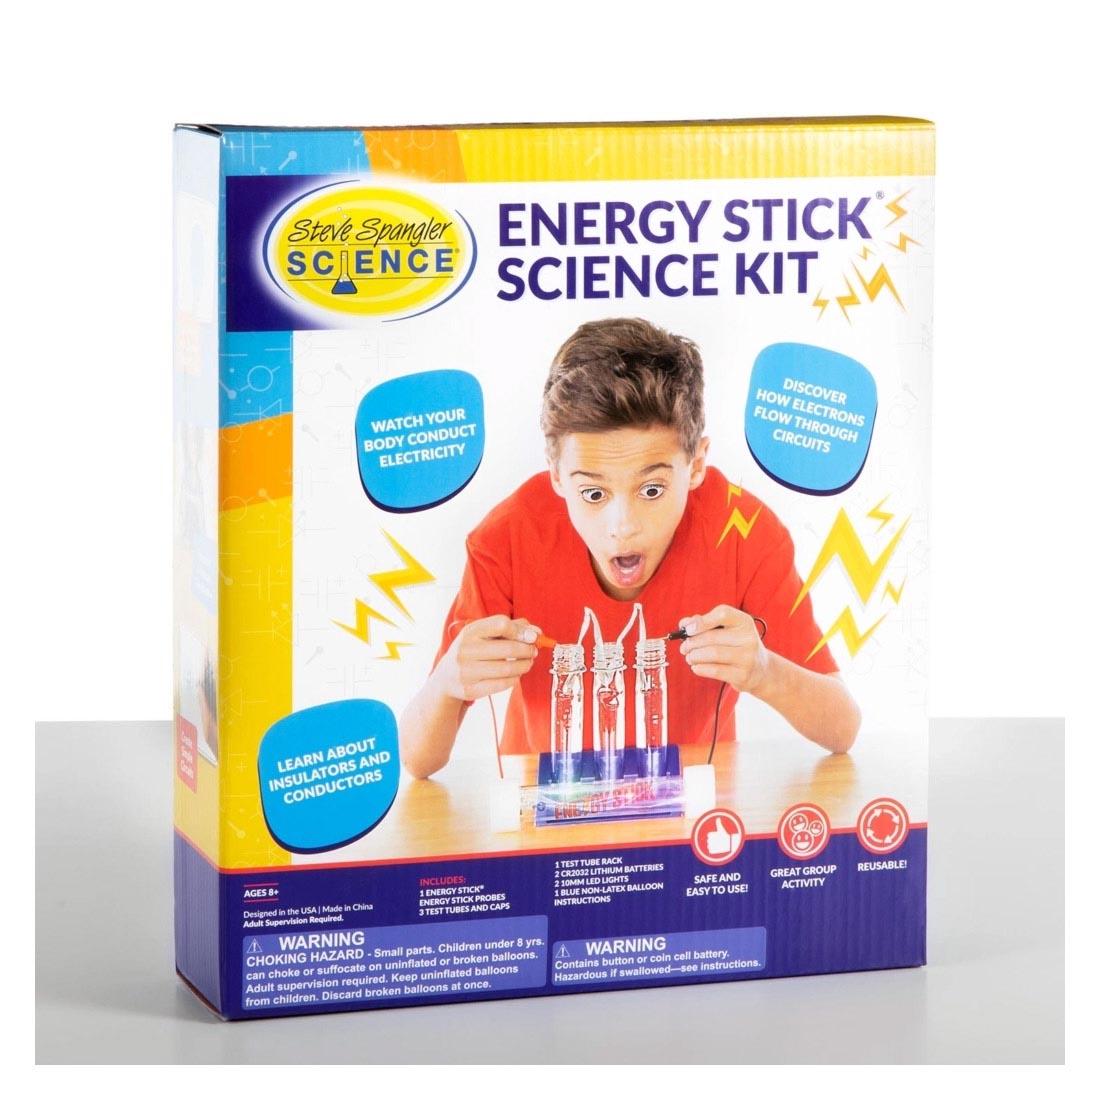 Energy Stick Science Kit By Steve Spangler Science package